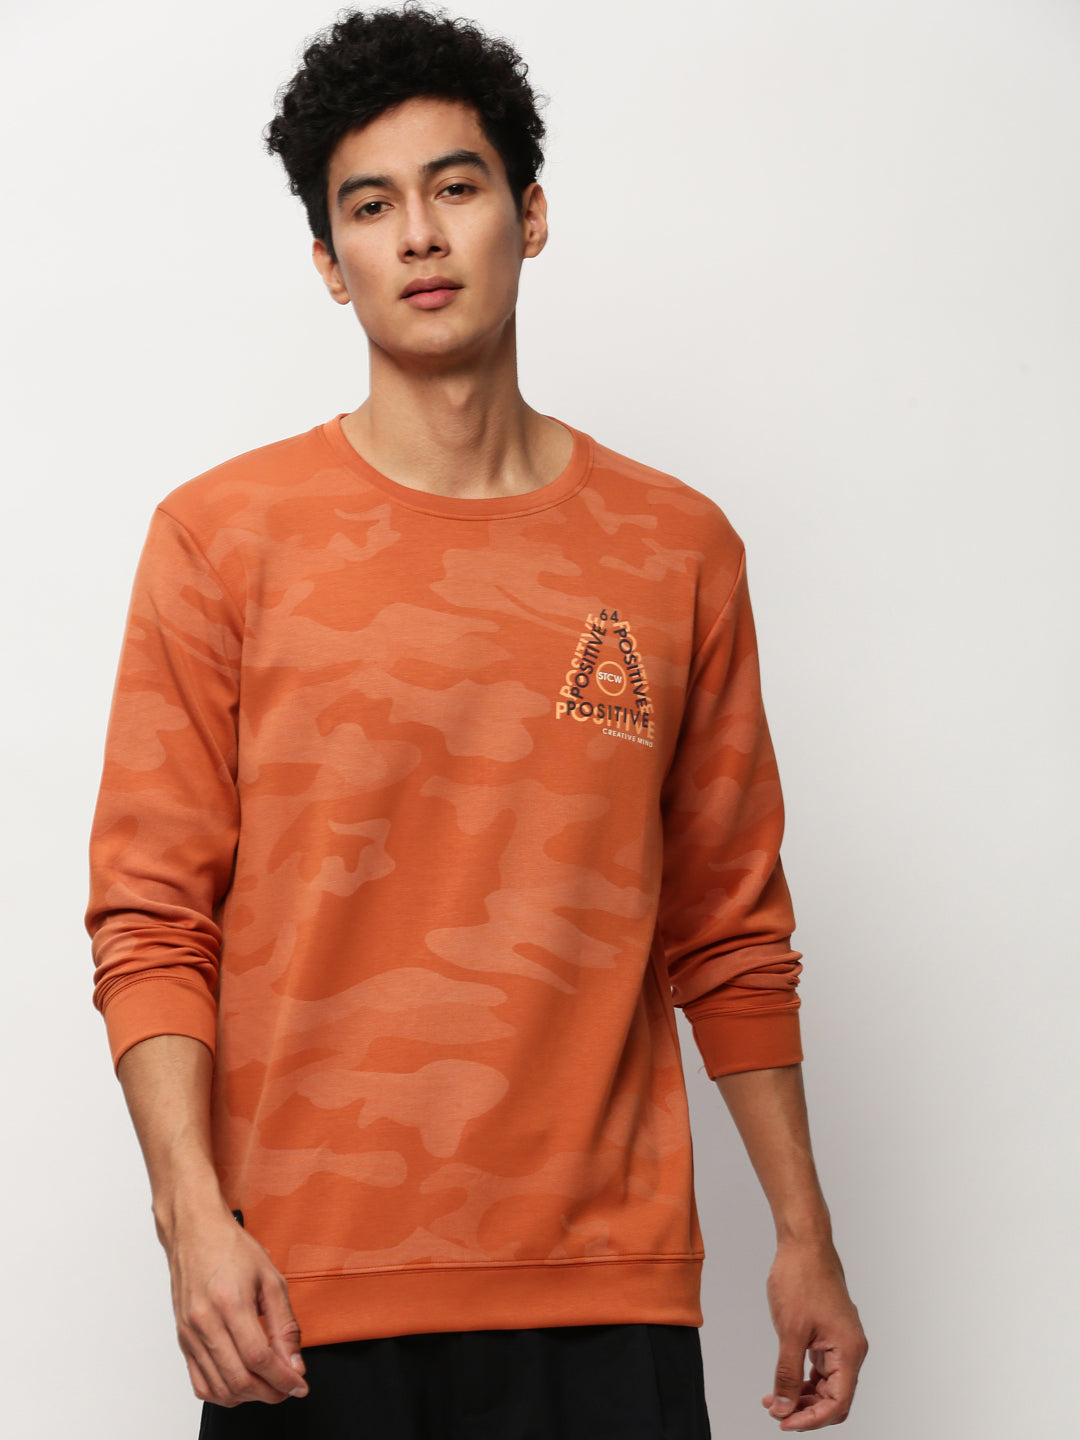 Men Orange Camouflage Casual Sweatshirts